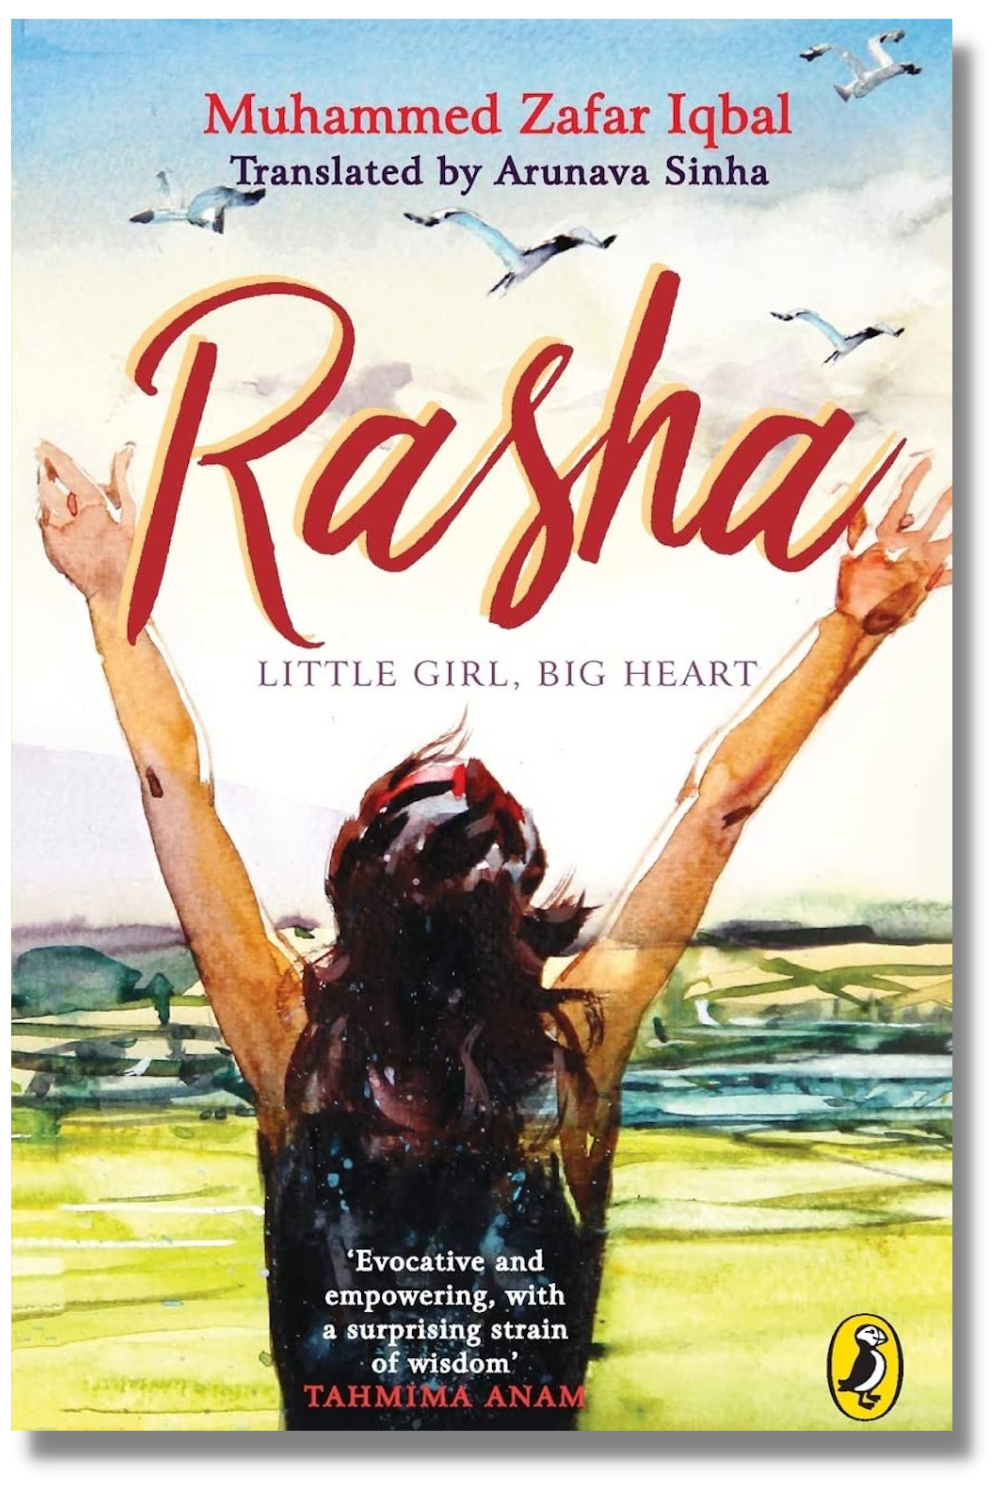 The cover of "Rasha"